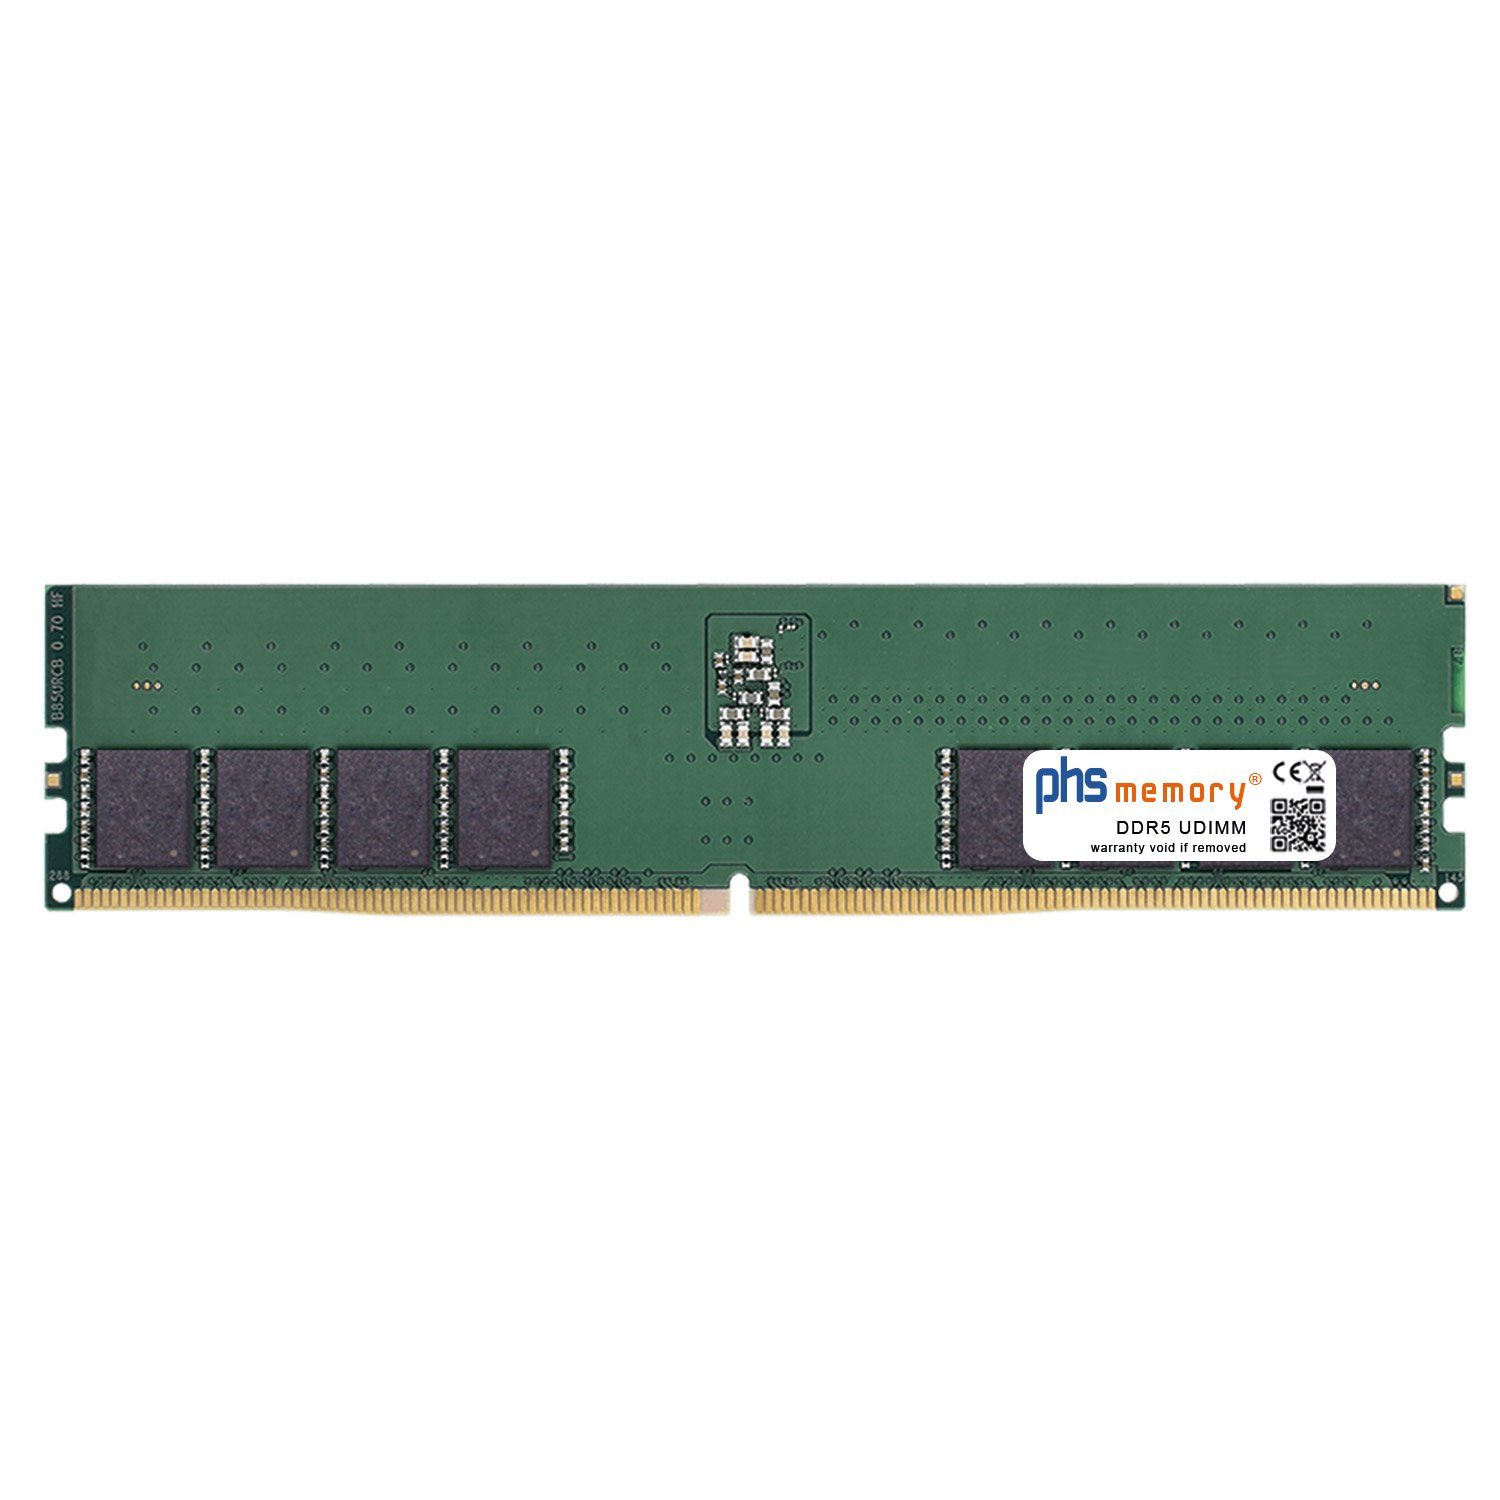 PHS-memory RAM für Captiva Highend Gaming I67-840 Arbeitsspeicher